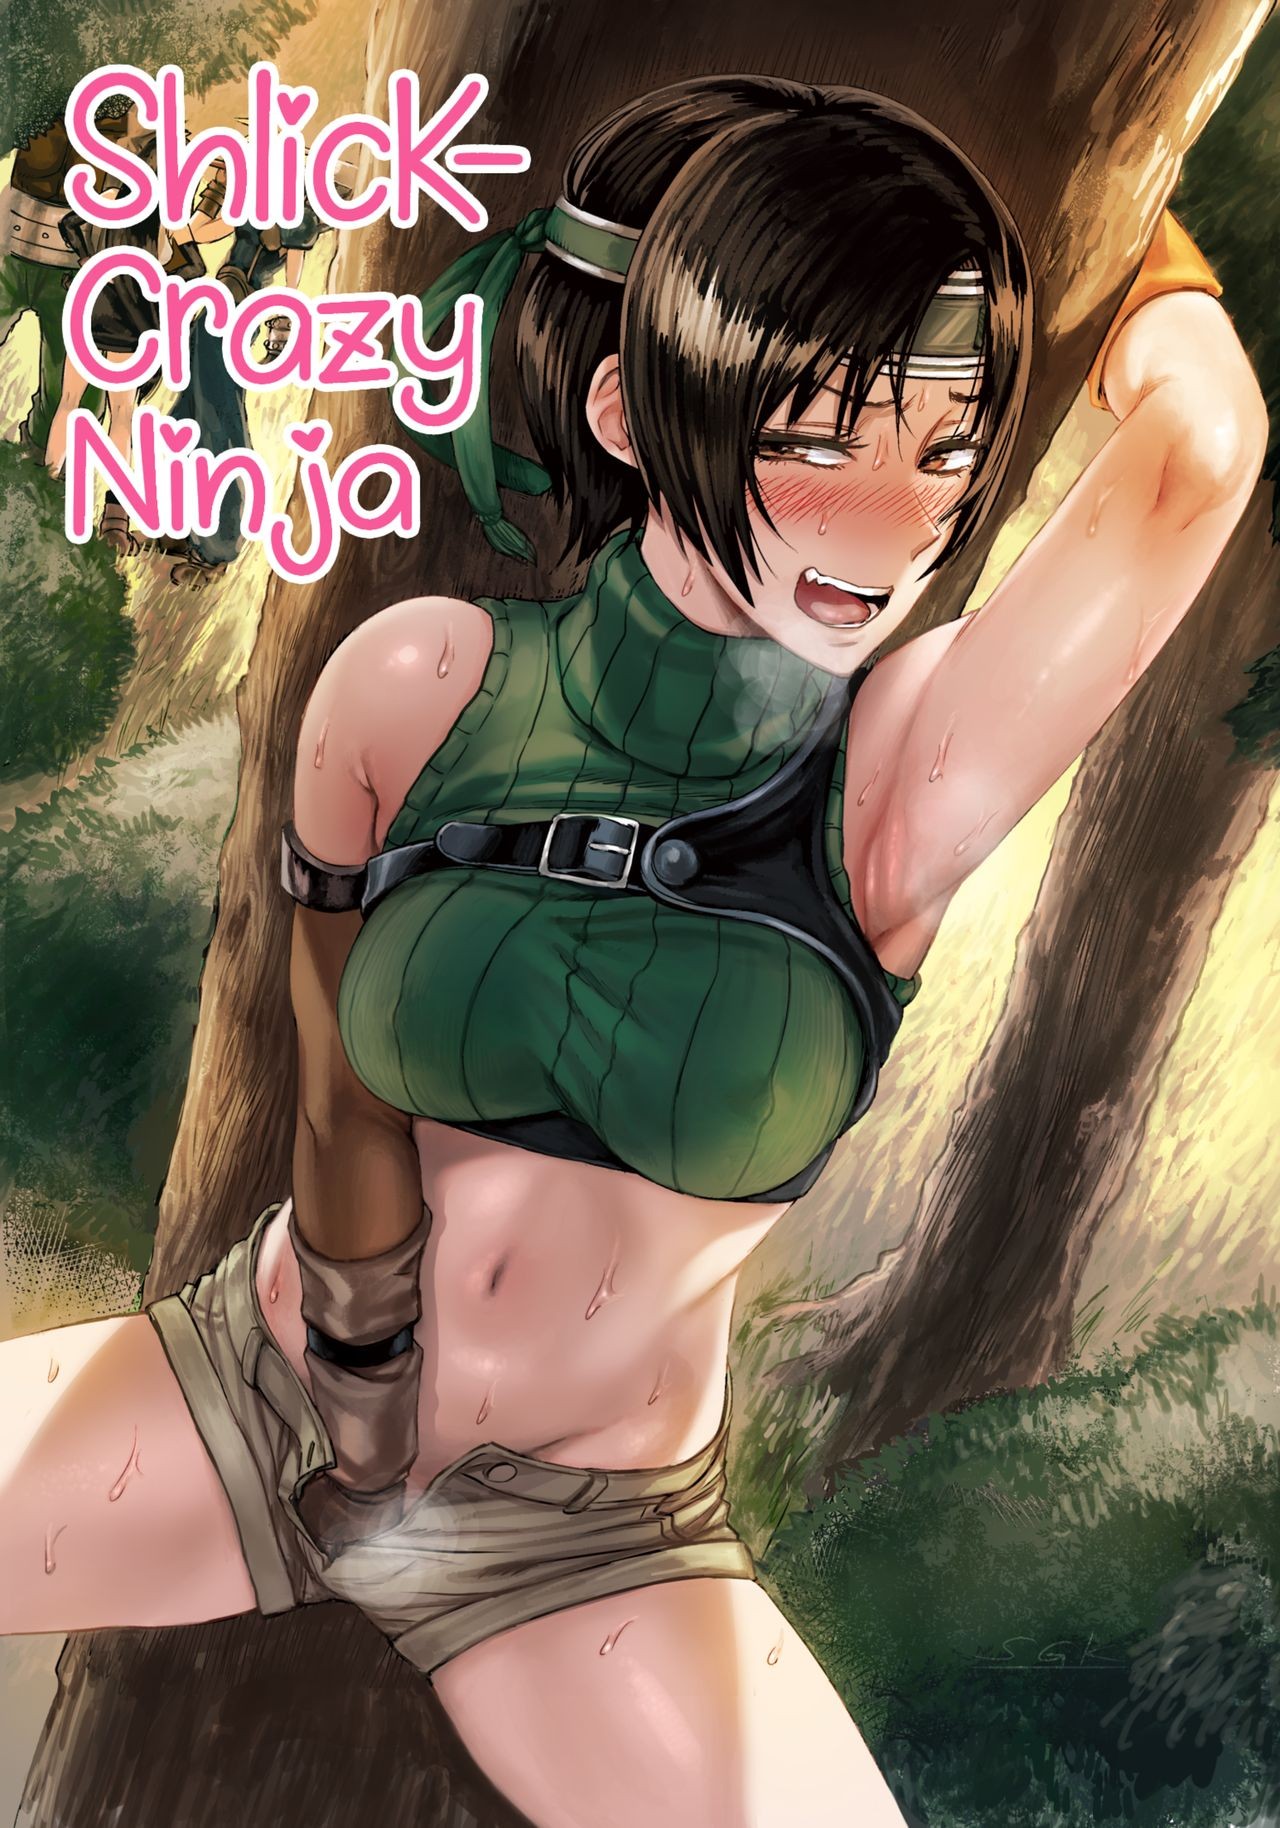 Shlick-Crazy Ninja Porn Comic english 01